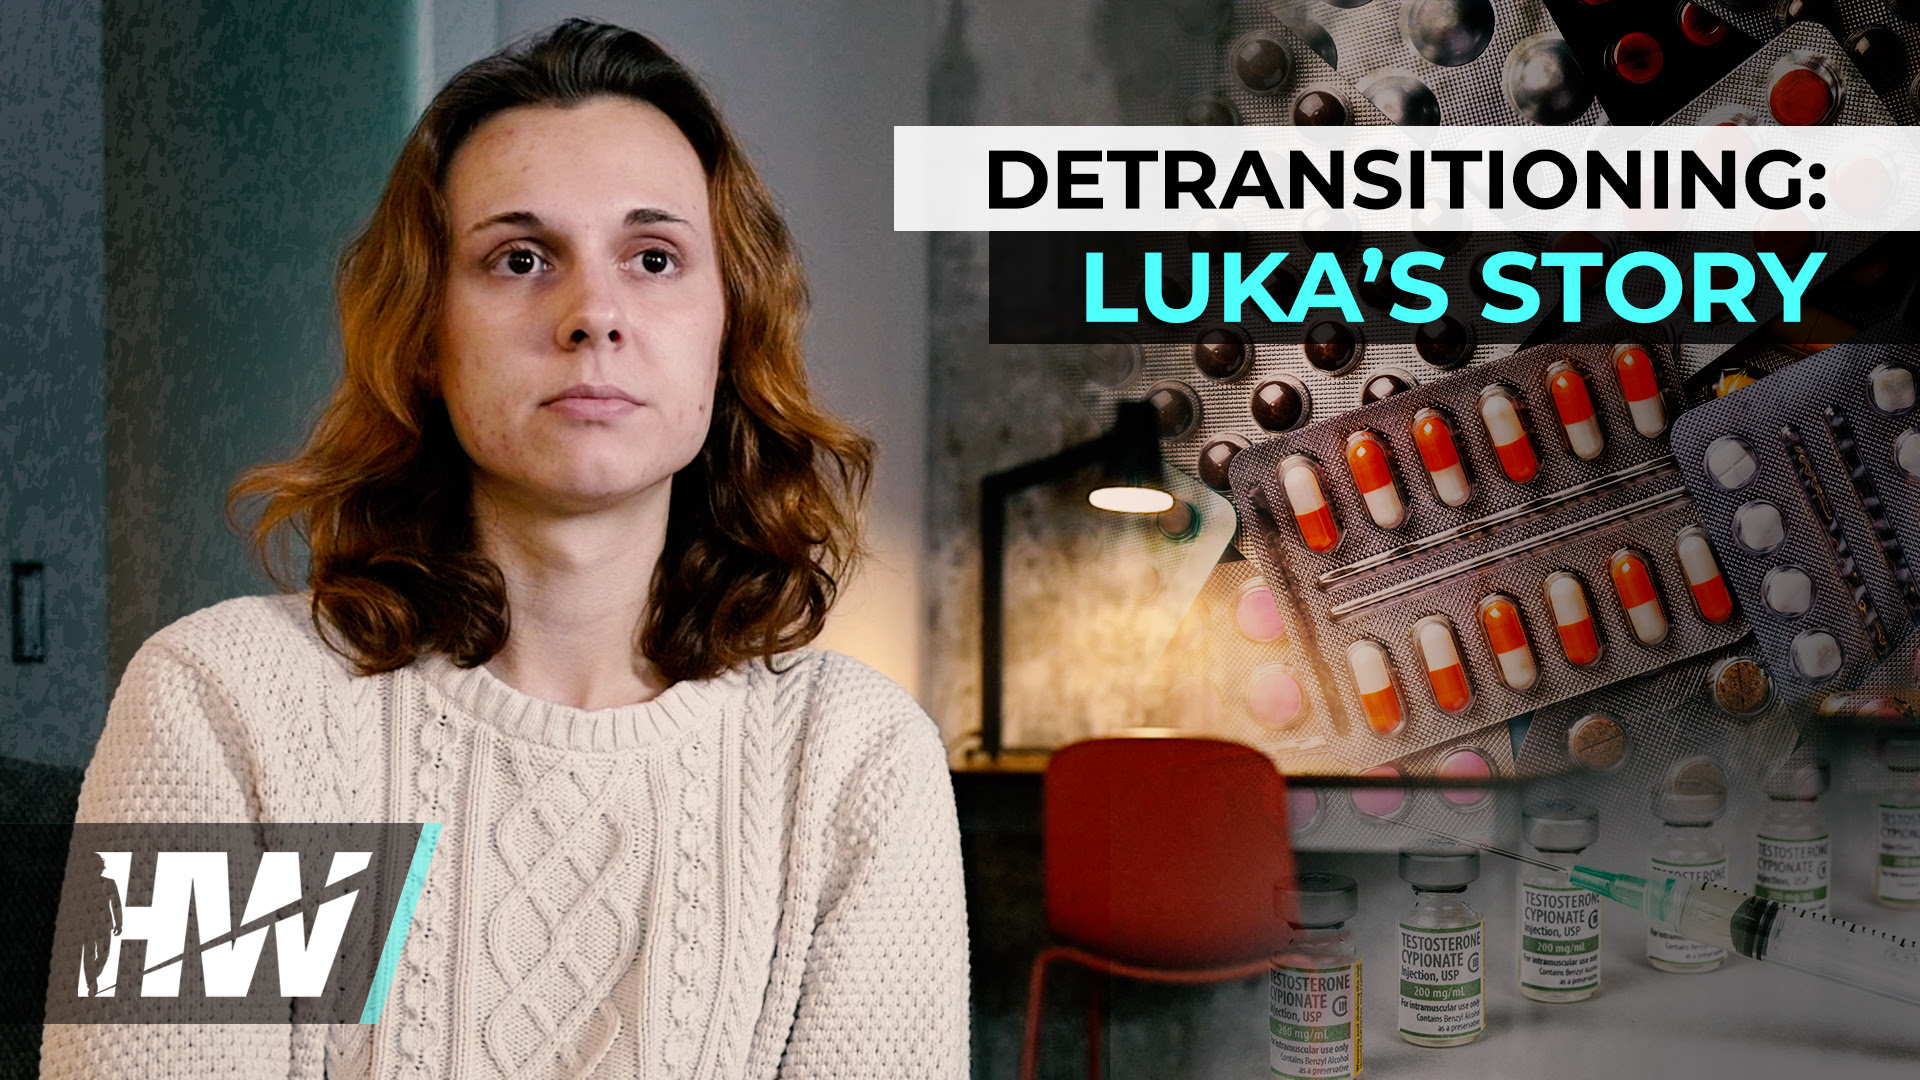 DETRANSITIONING: LUKA'S STORY